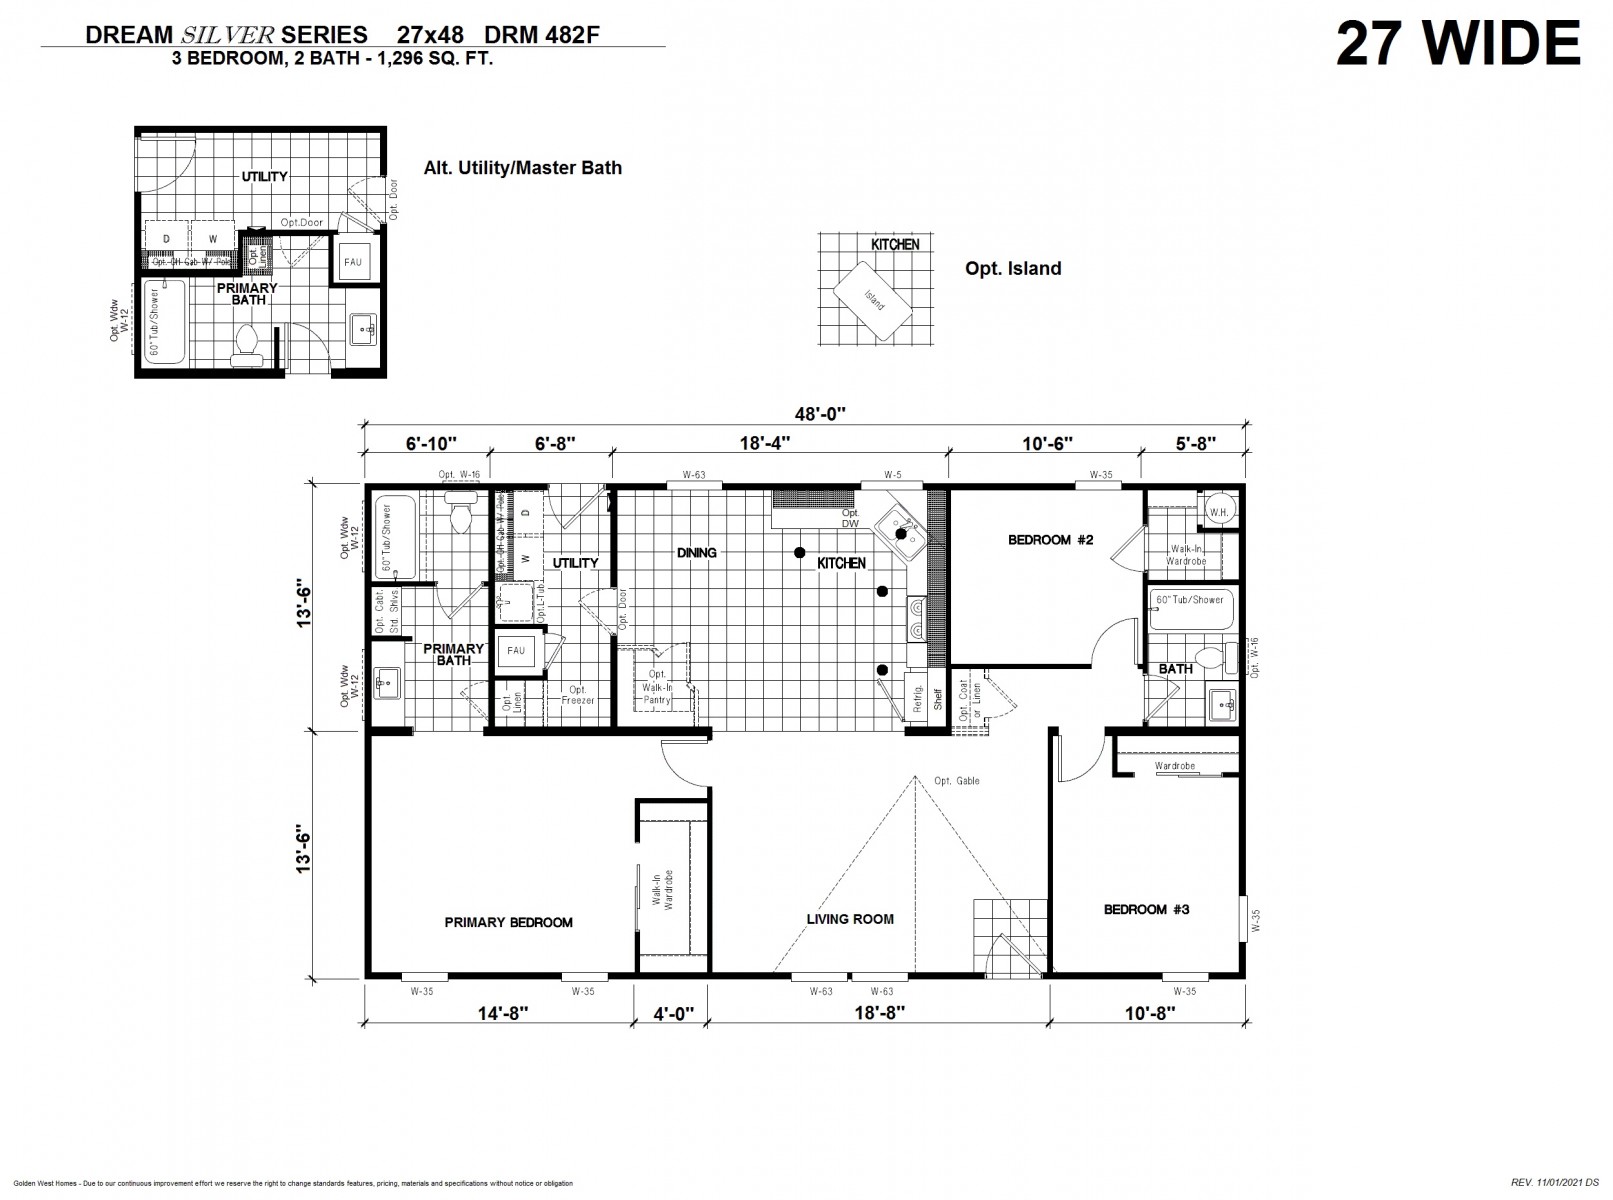 Homes Direct Modular Homes - Model DRM482F - Floorplan